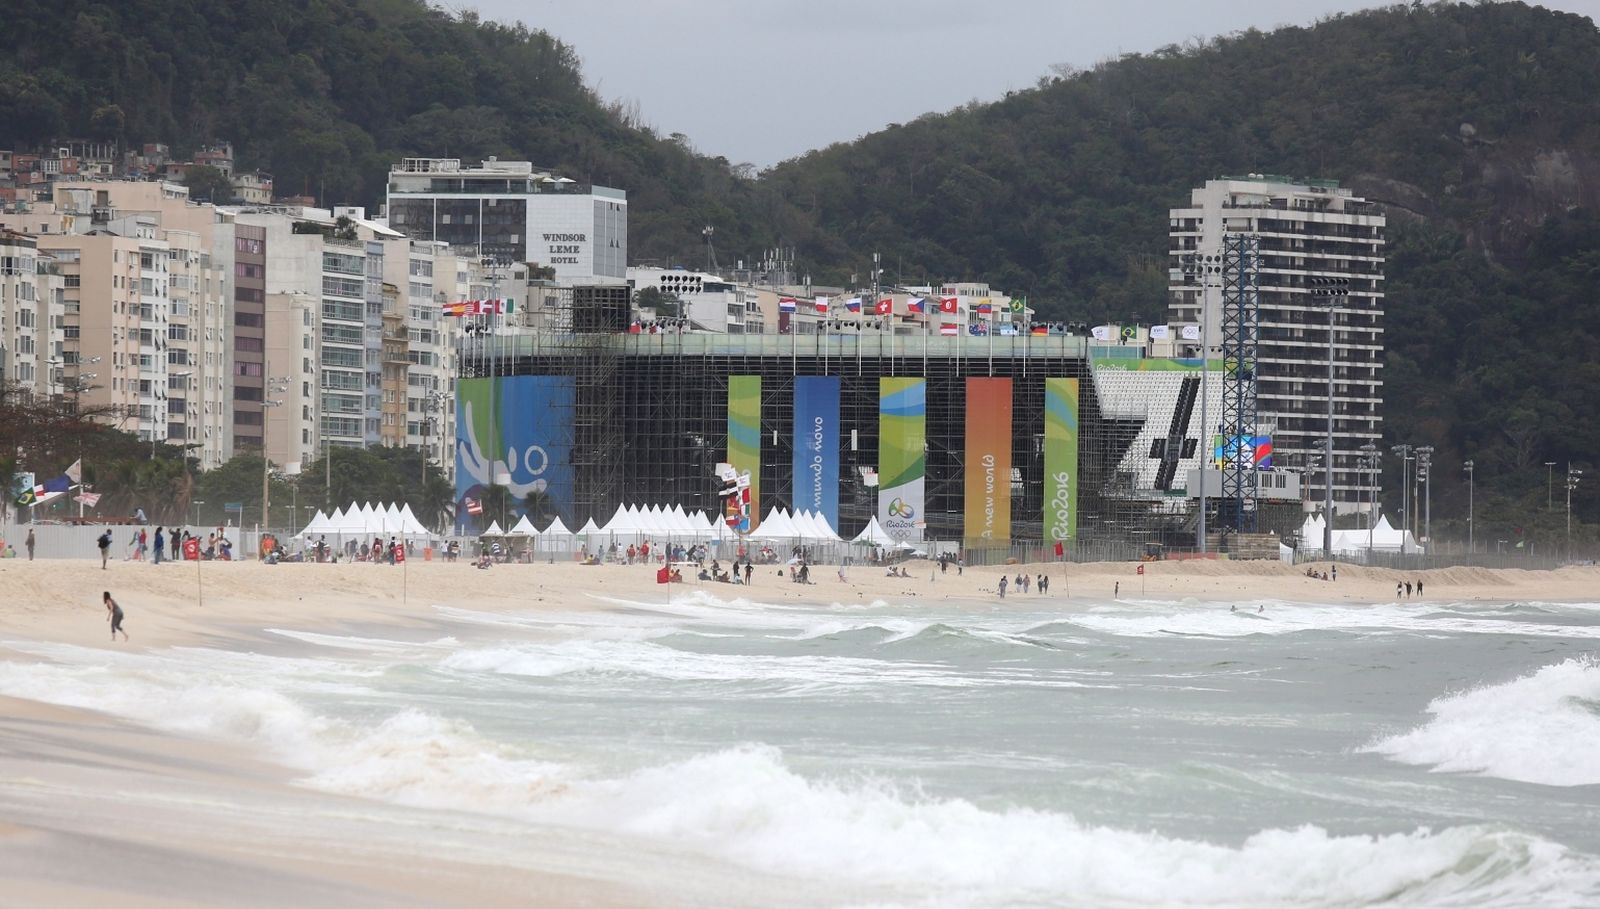 03.08.2016., Rio de Janeiro, Brazil - Olimpijske igre Rio 2016. Olympic Beach Volleyball Arena na plazi Copacabana.
Photo: Igor Kralj/PIXSELL